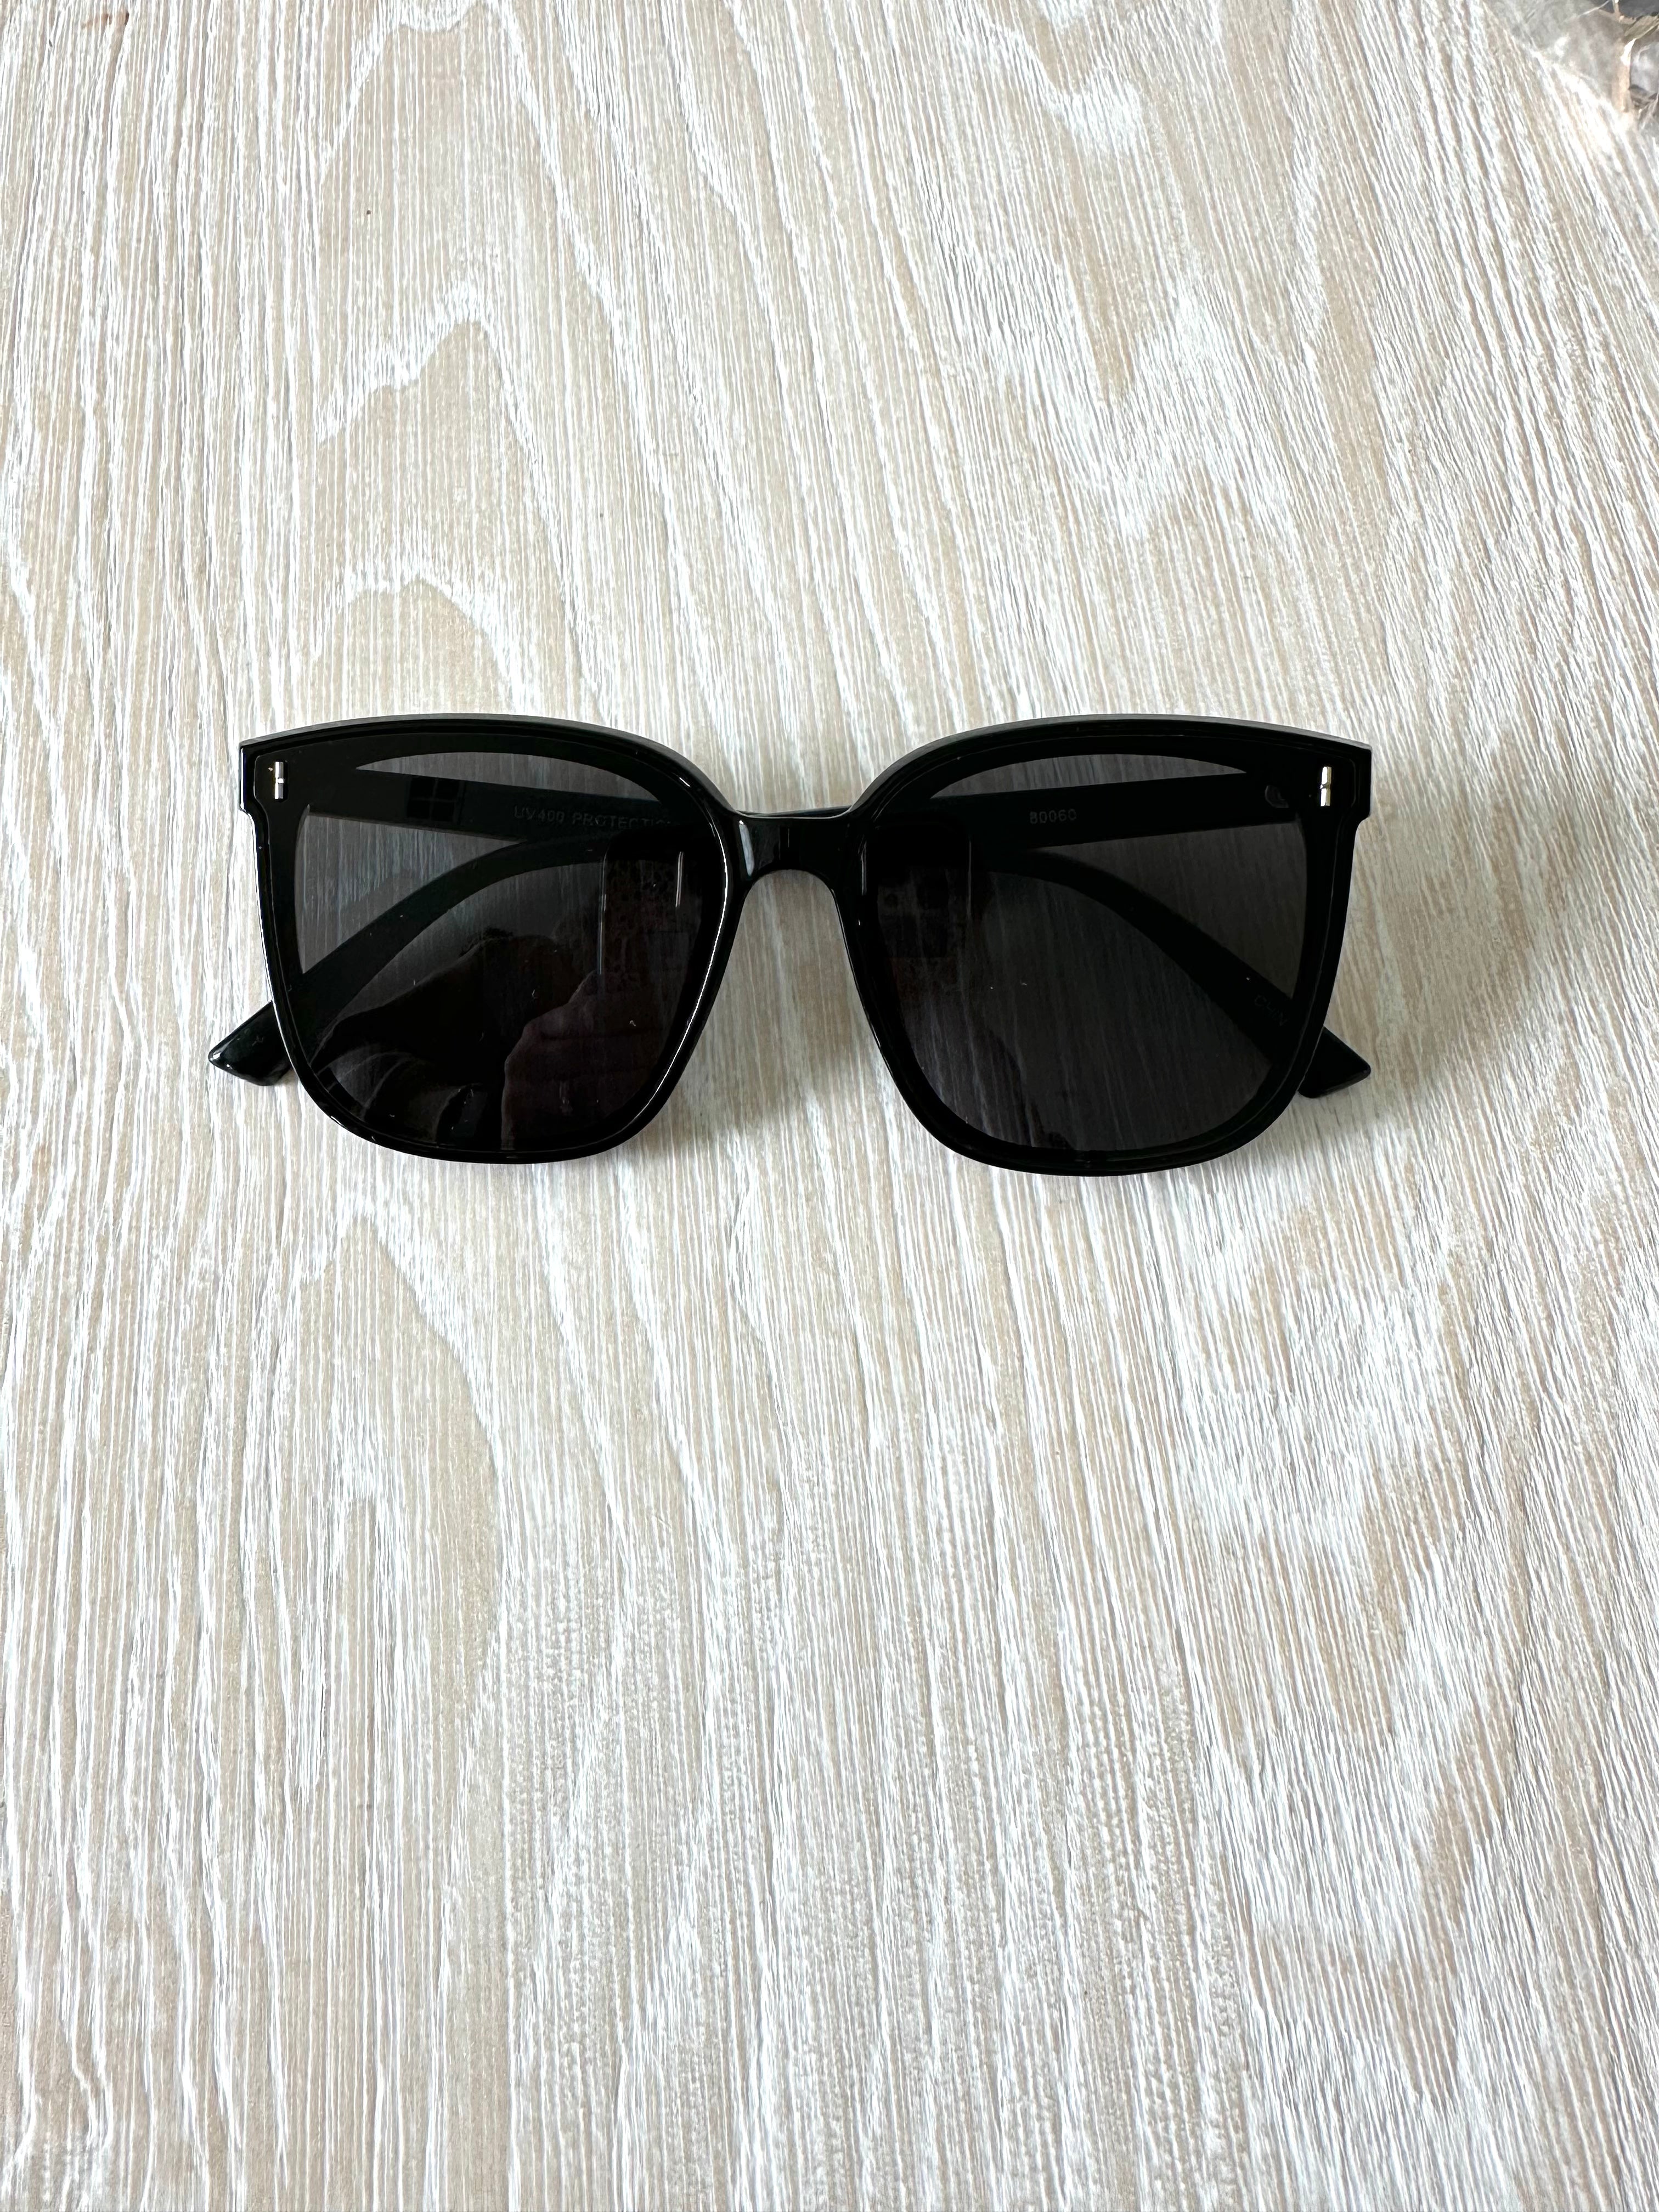 image of Shade Thrown Sunglasses